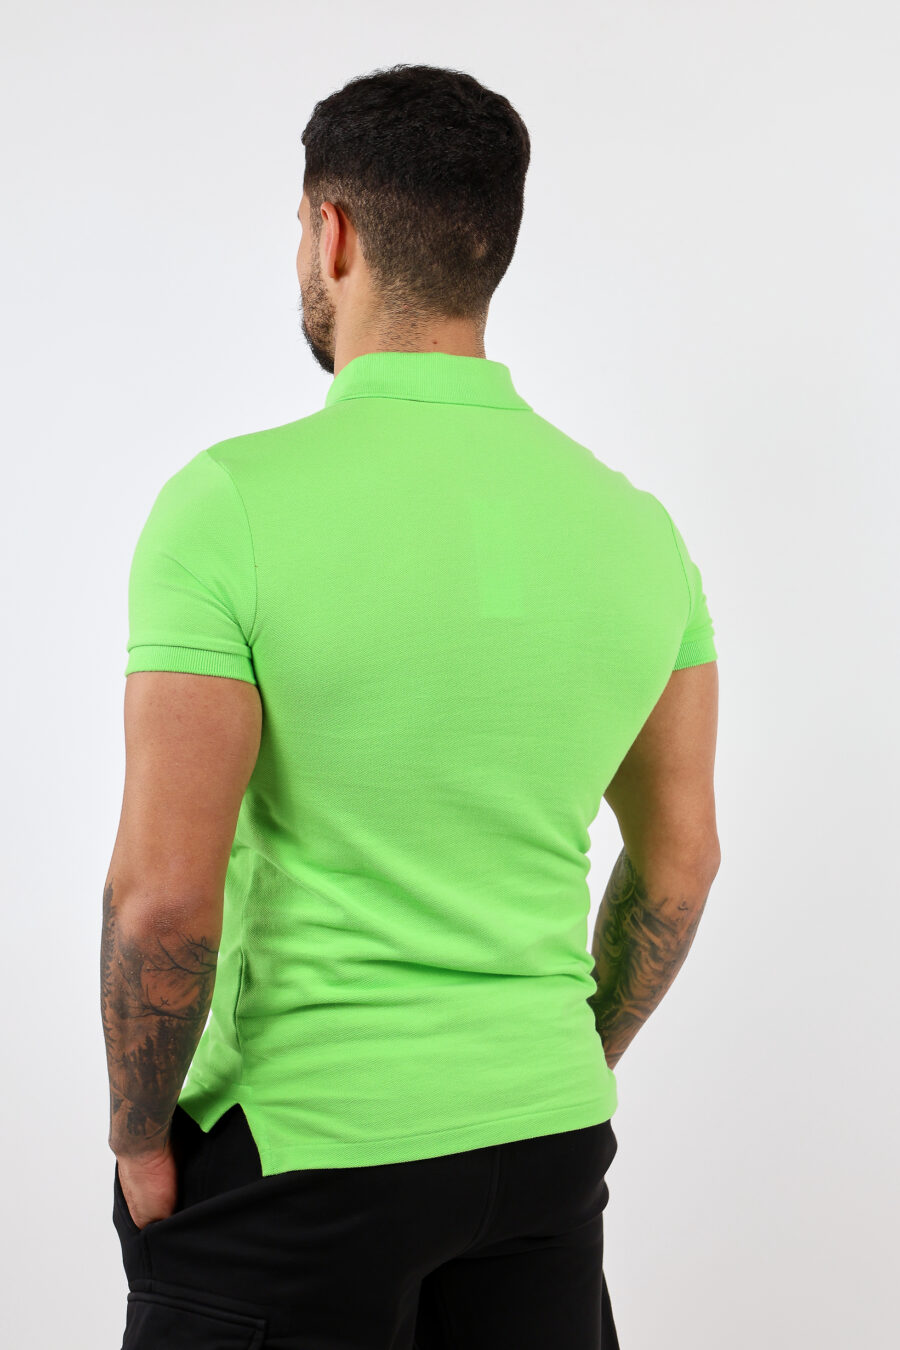 Pólo verde claro com mini logótipo "polo" - BLS Fashion 300 1